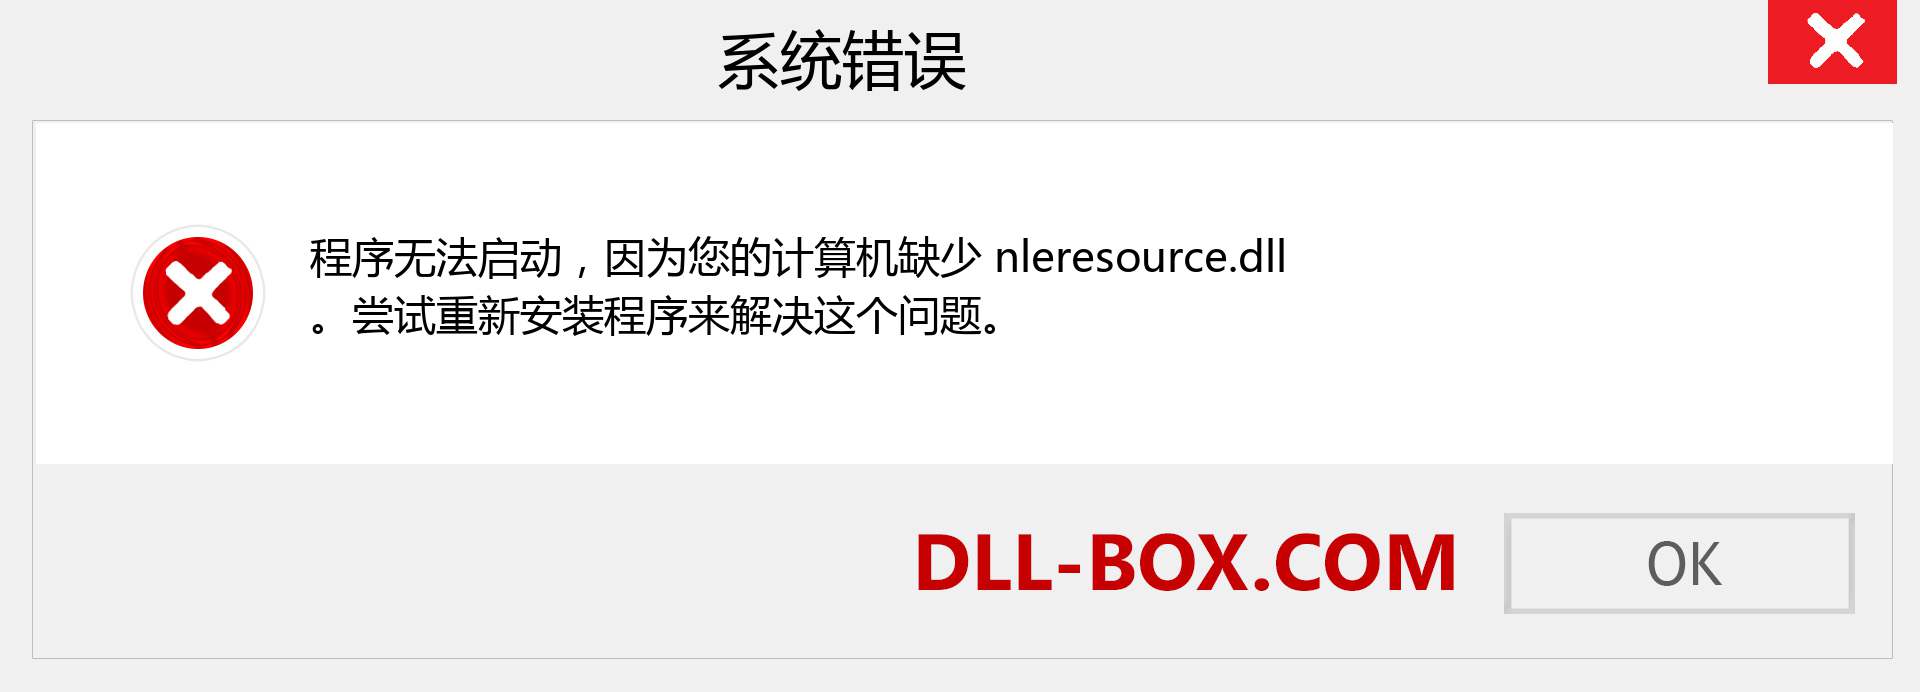 nleresource.dll 文件丢失？。 适用于 Windows 7、8、10 的下载 - 修复 Windows、照片、图像上的 nleresource dll 丢失错误